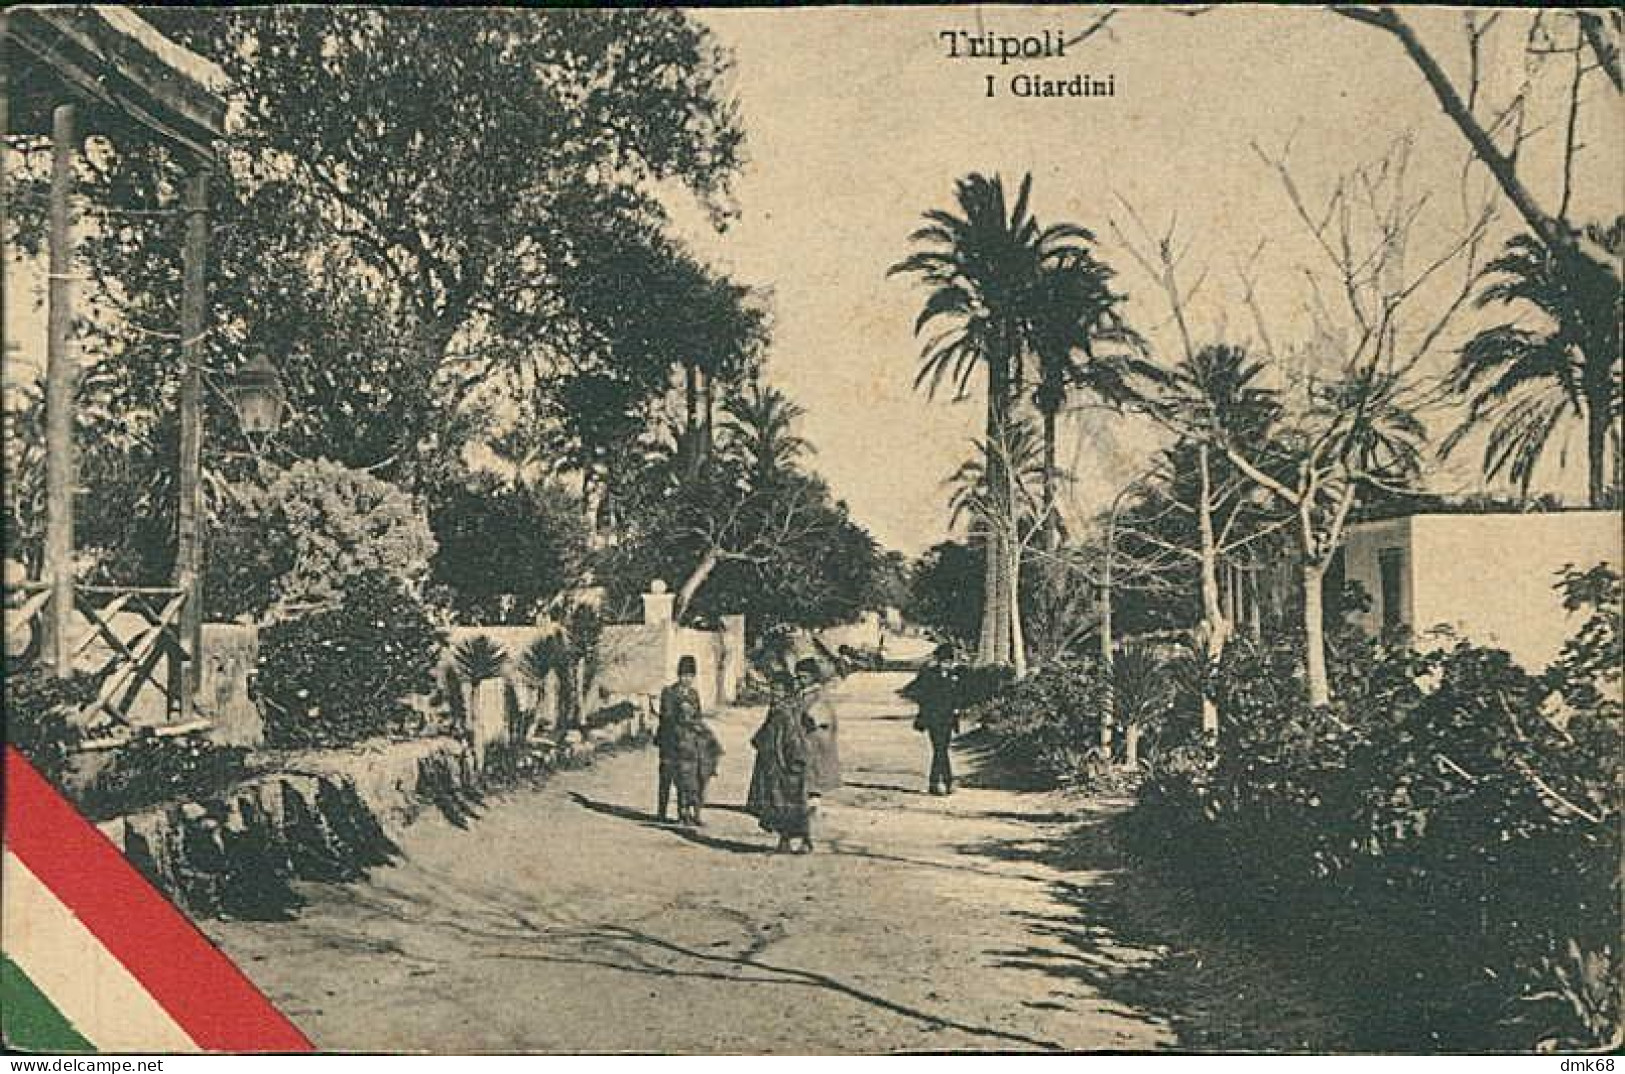 LIBYA / LIBIA - TRIPOLI - I GIARDINI - 1910s (12486) - Libyen